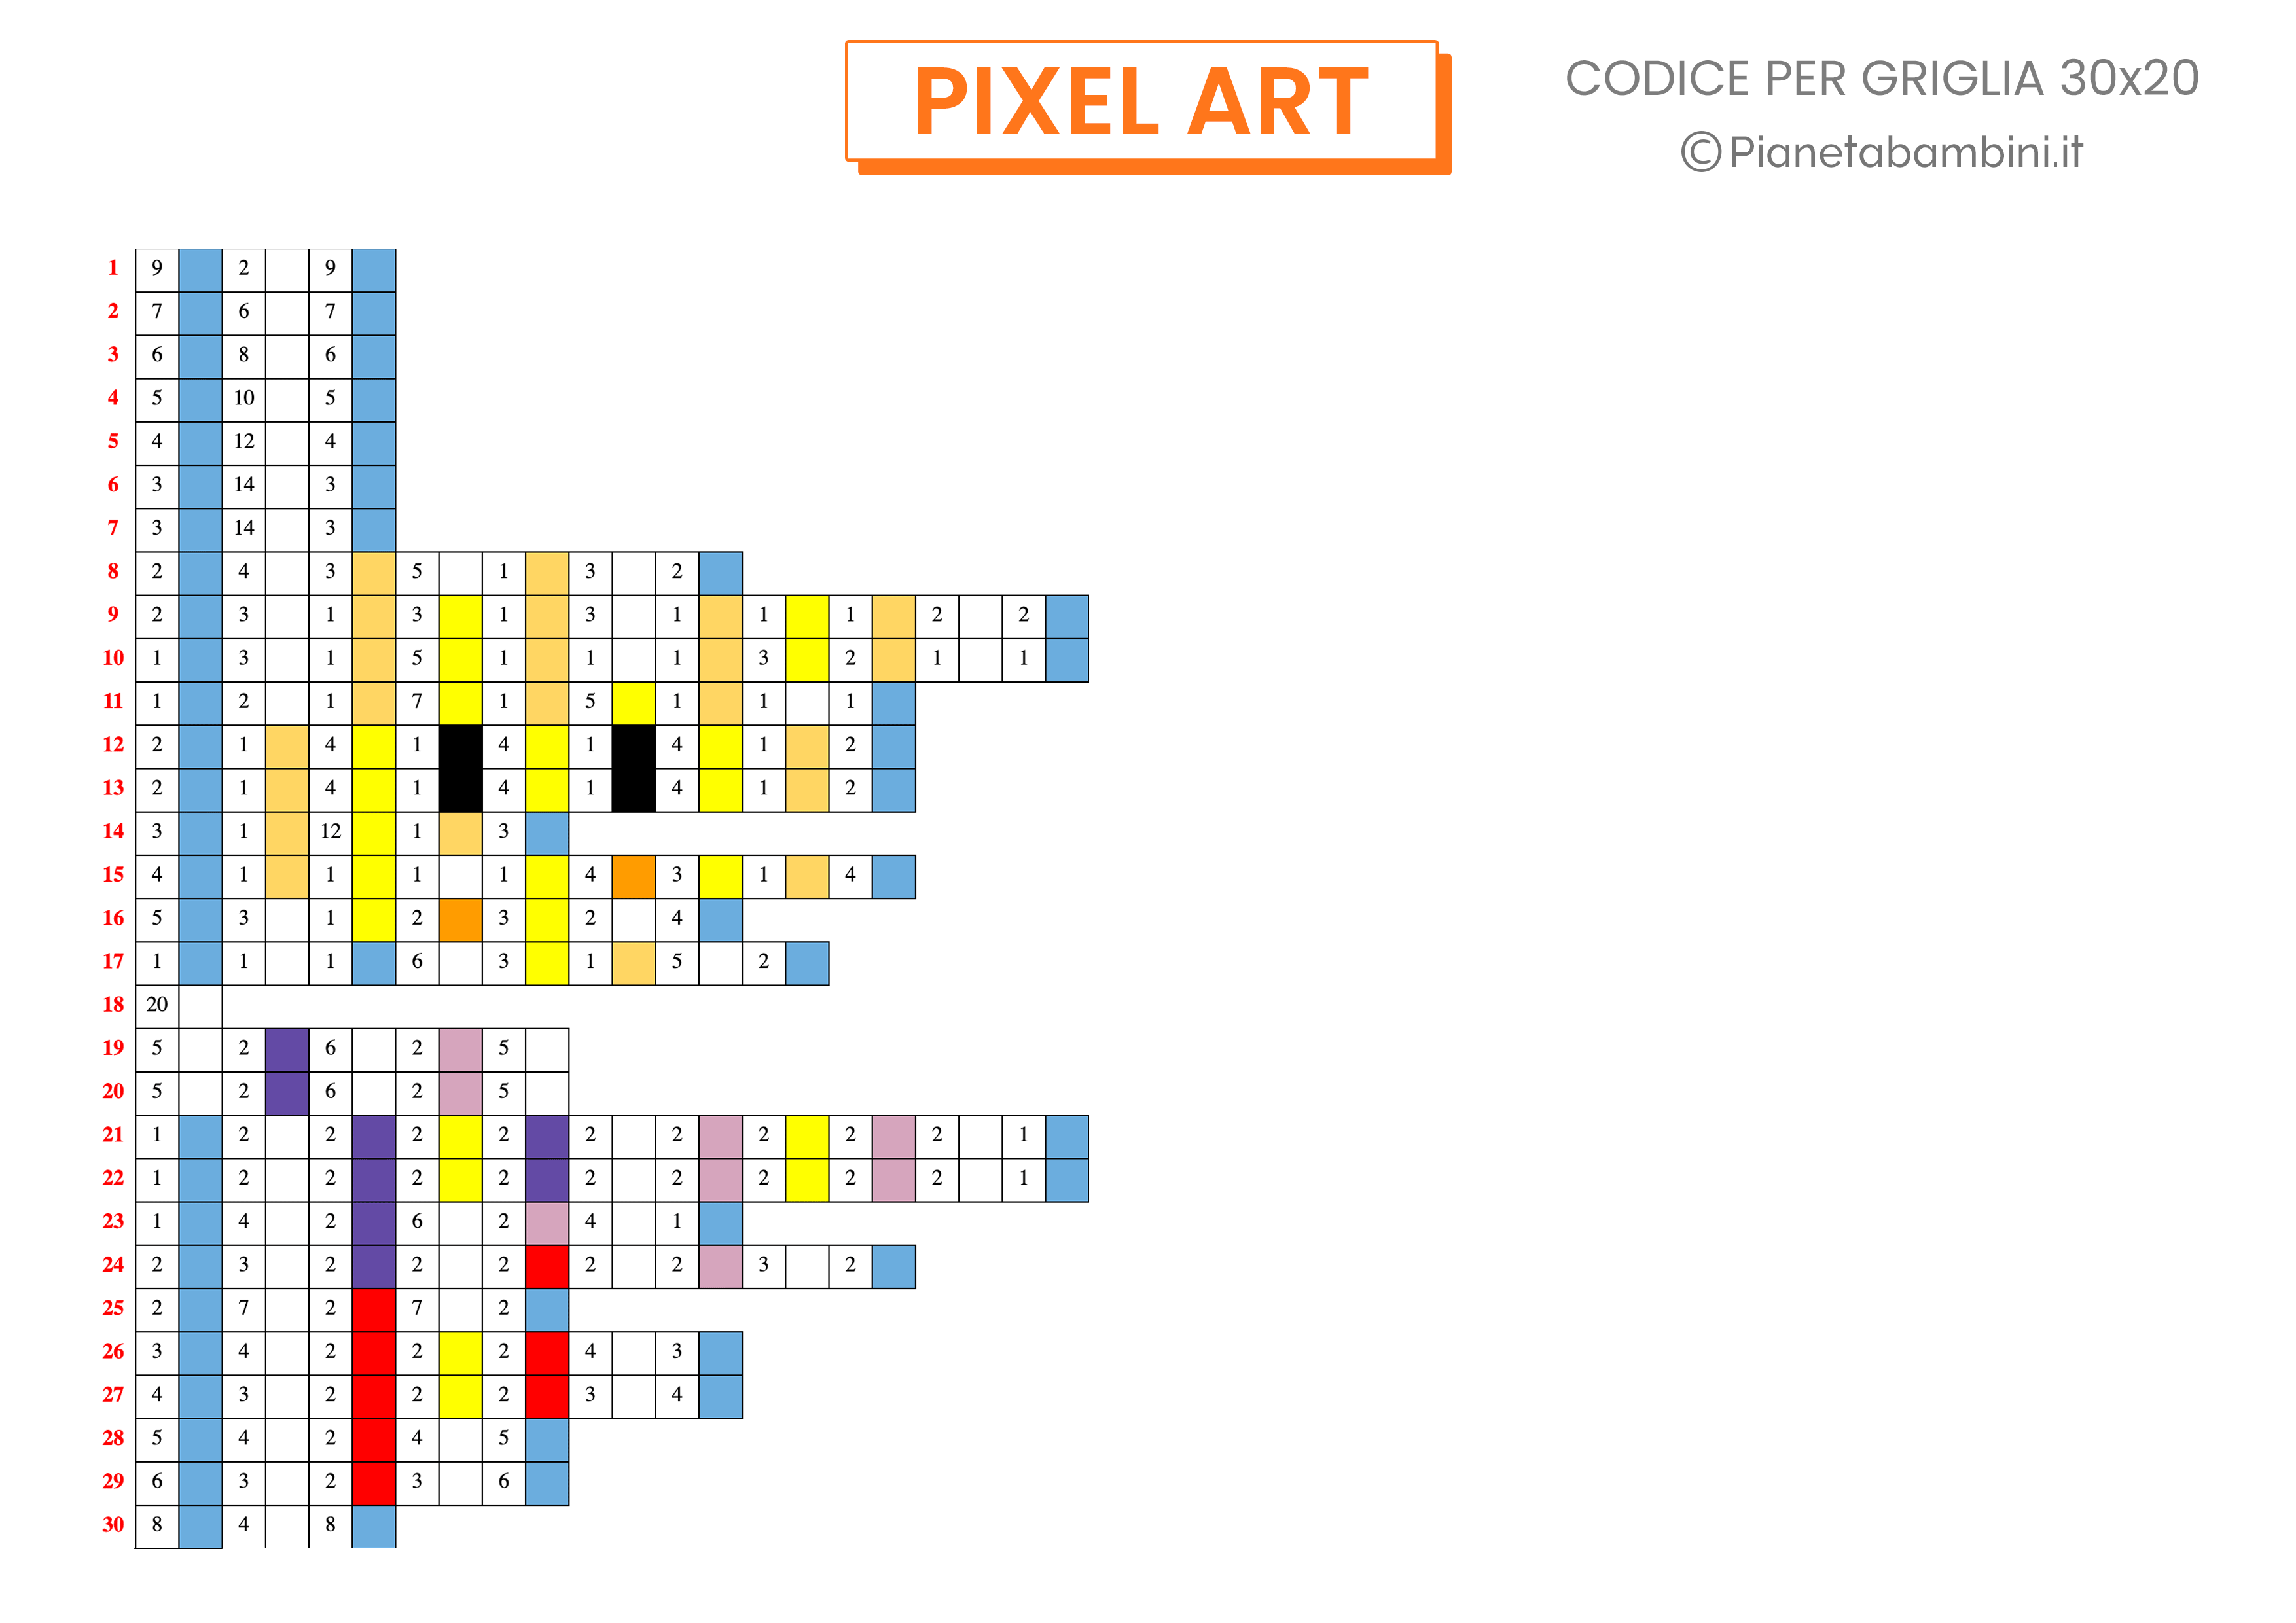 Pixel Art Pasqua Codice Difficile 01